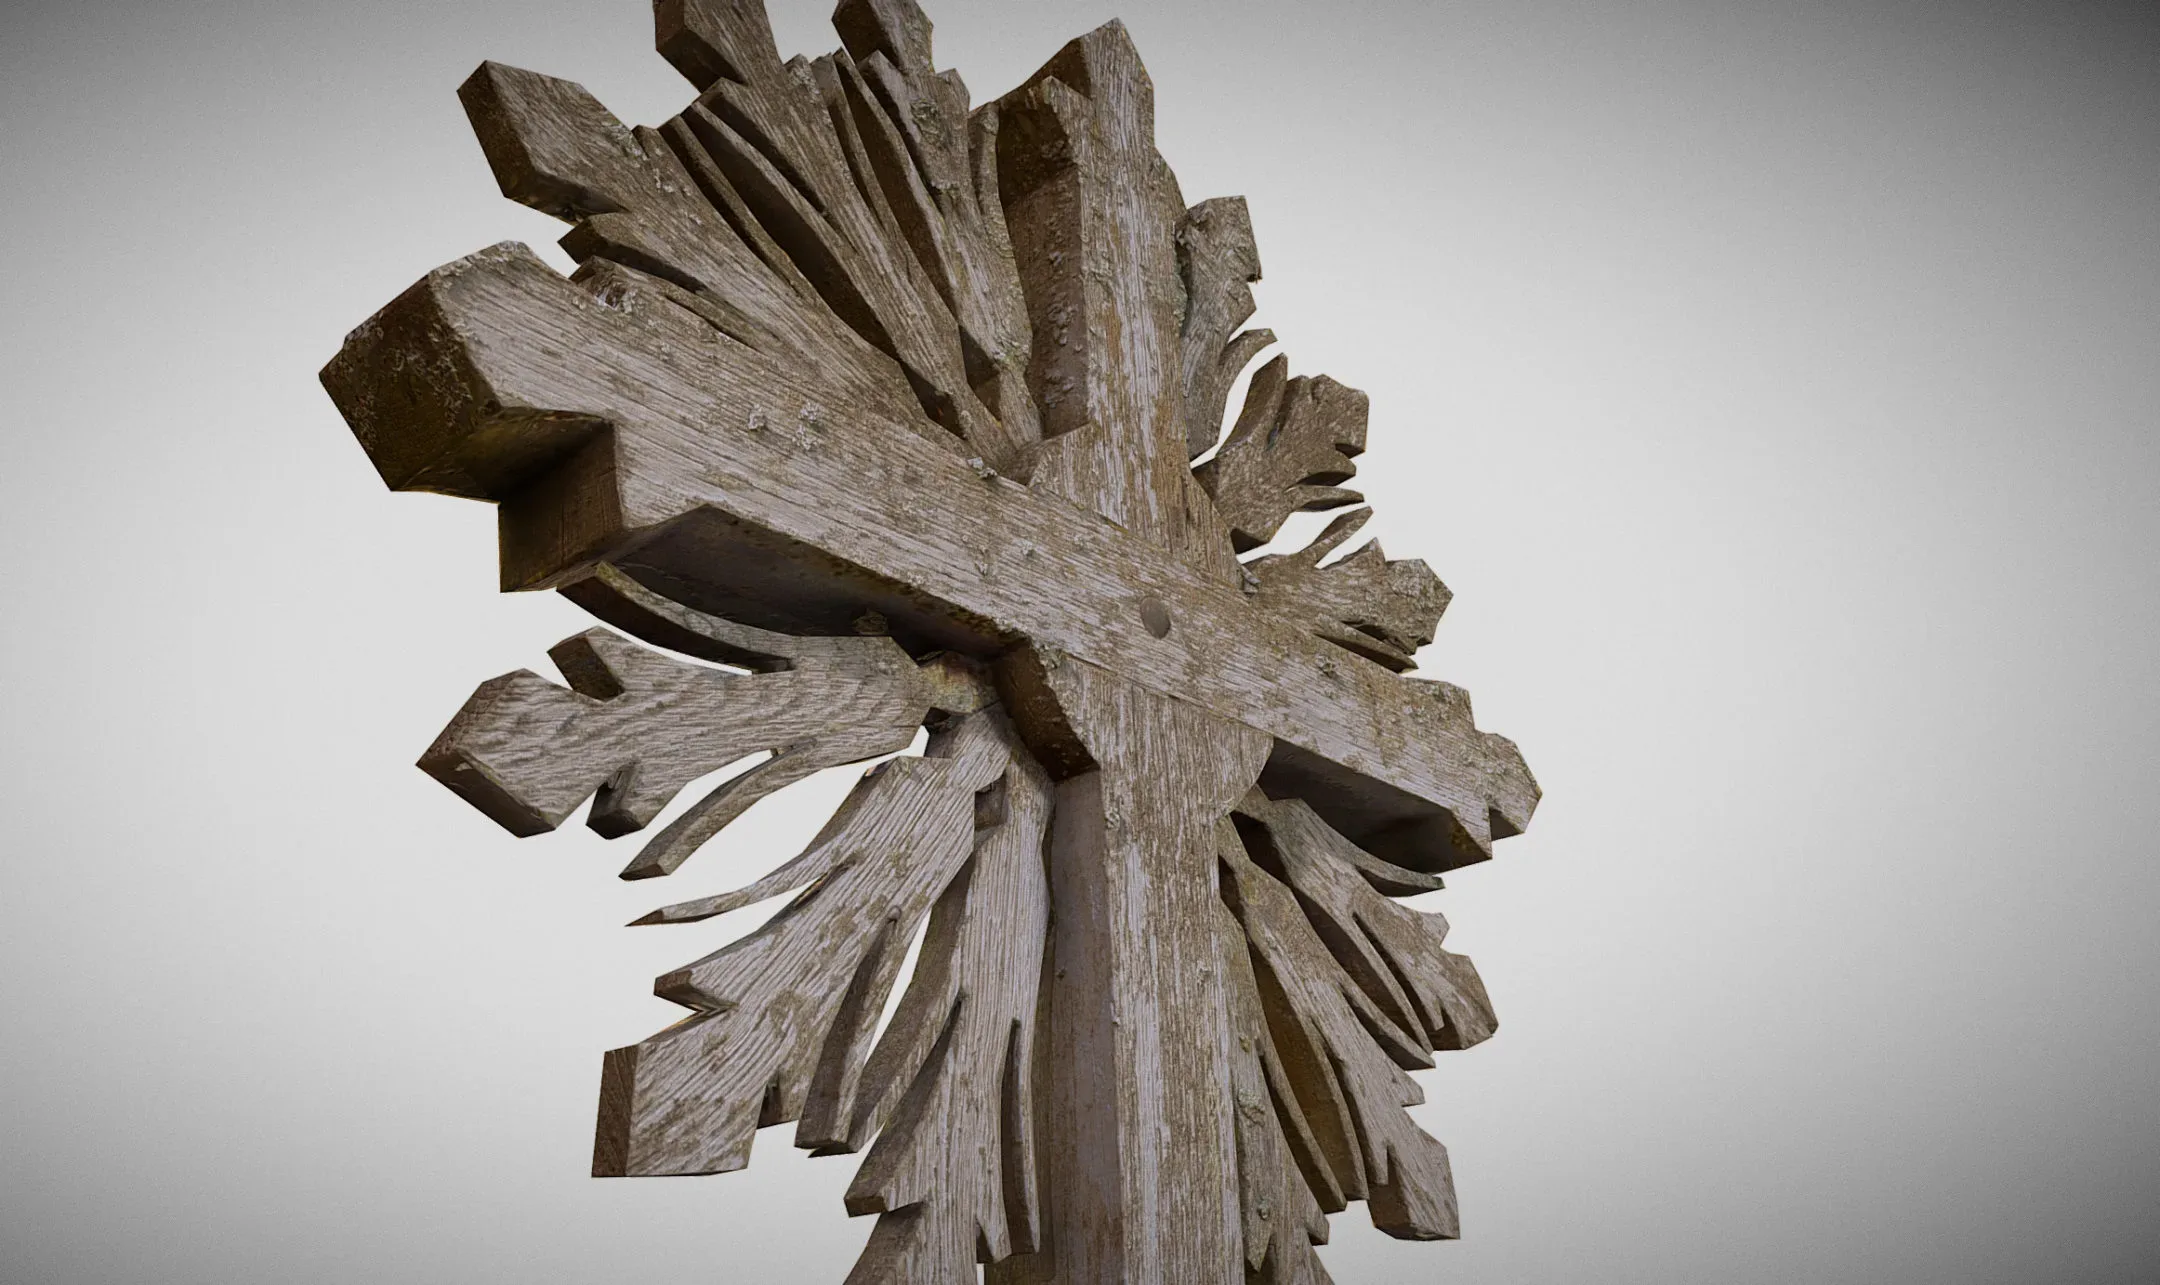 small wooden cross